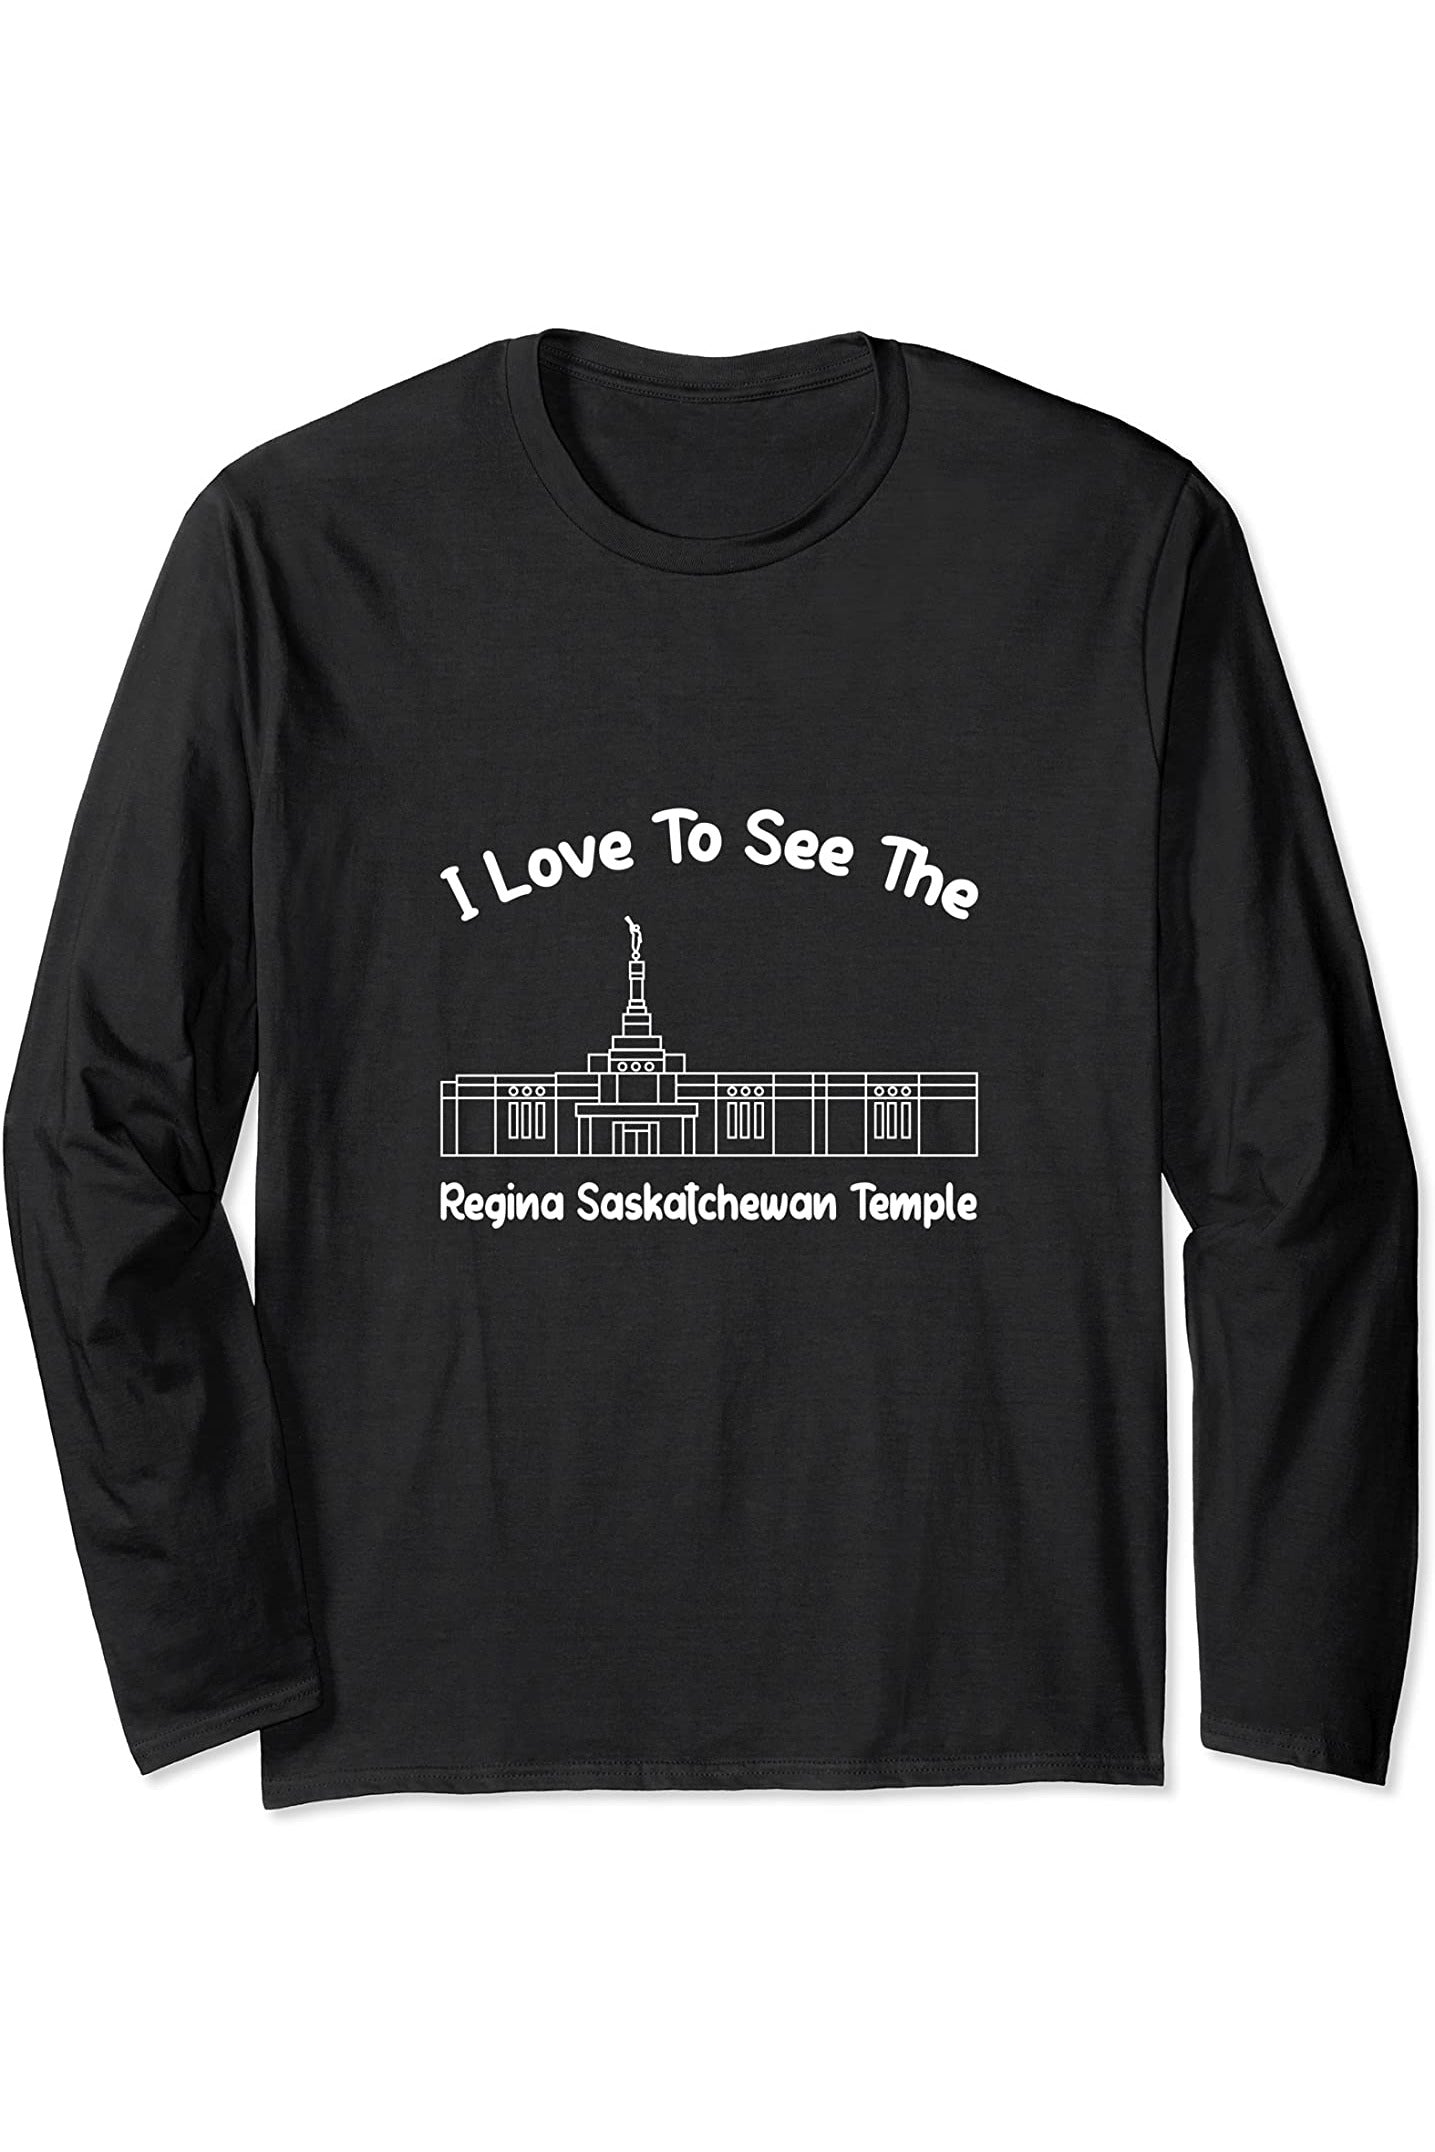 Regina Saskatchewan Temple Long Sleeve T-Shirt - Primary Style (English) US